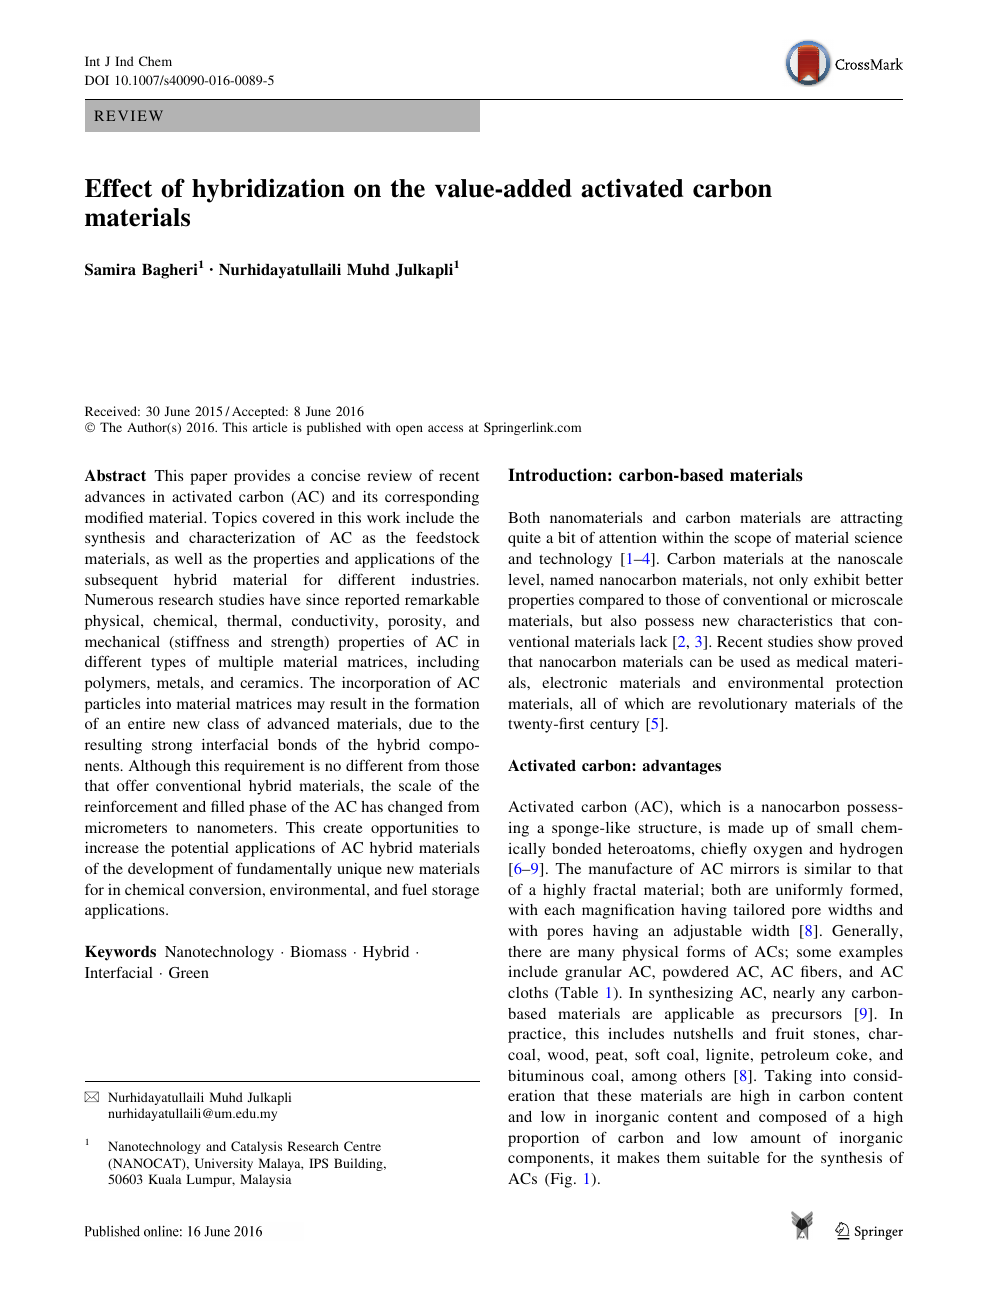 Cellulose acetate-TiO2 and activated carbon electrospun composite